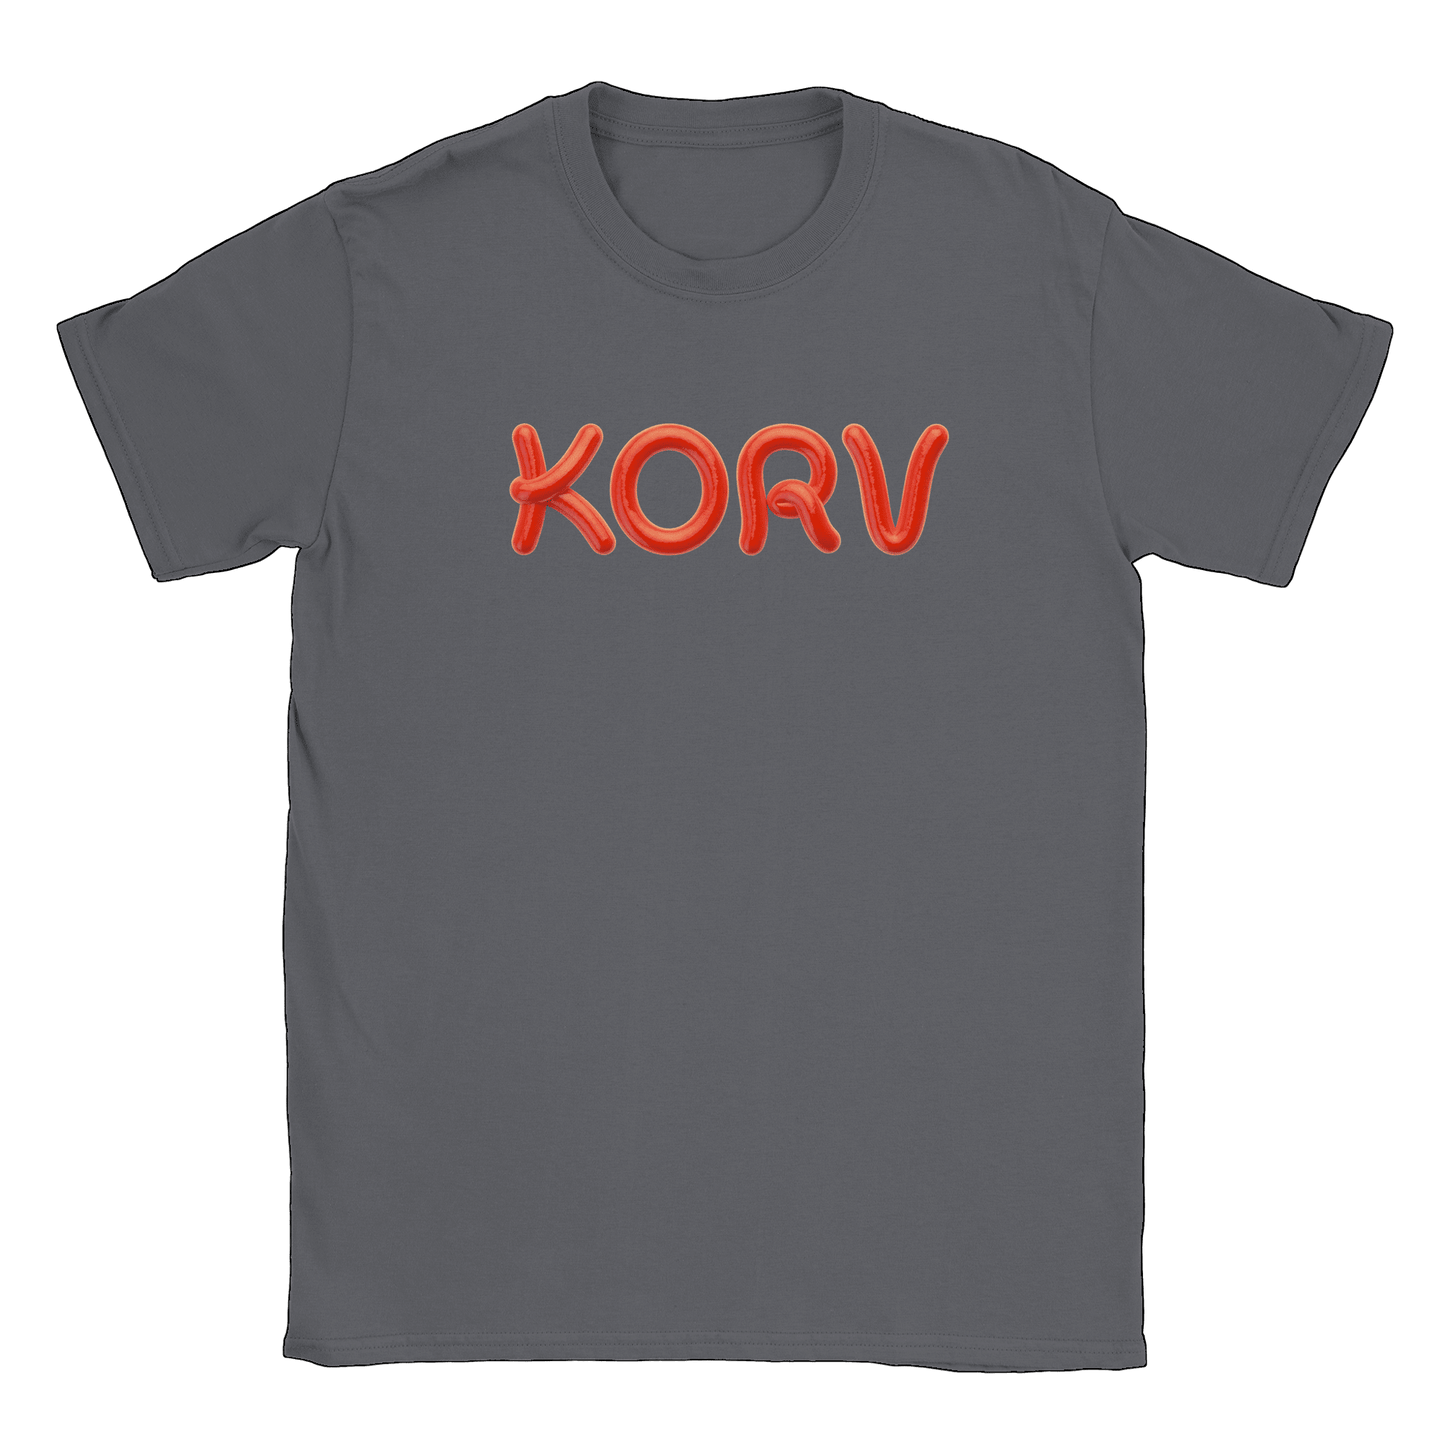 Korv - T-shirt Charcoal